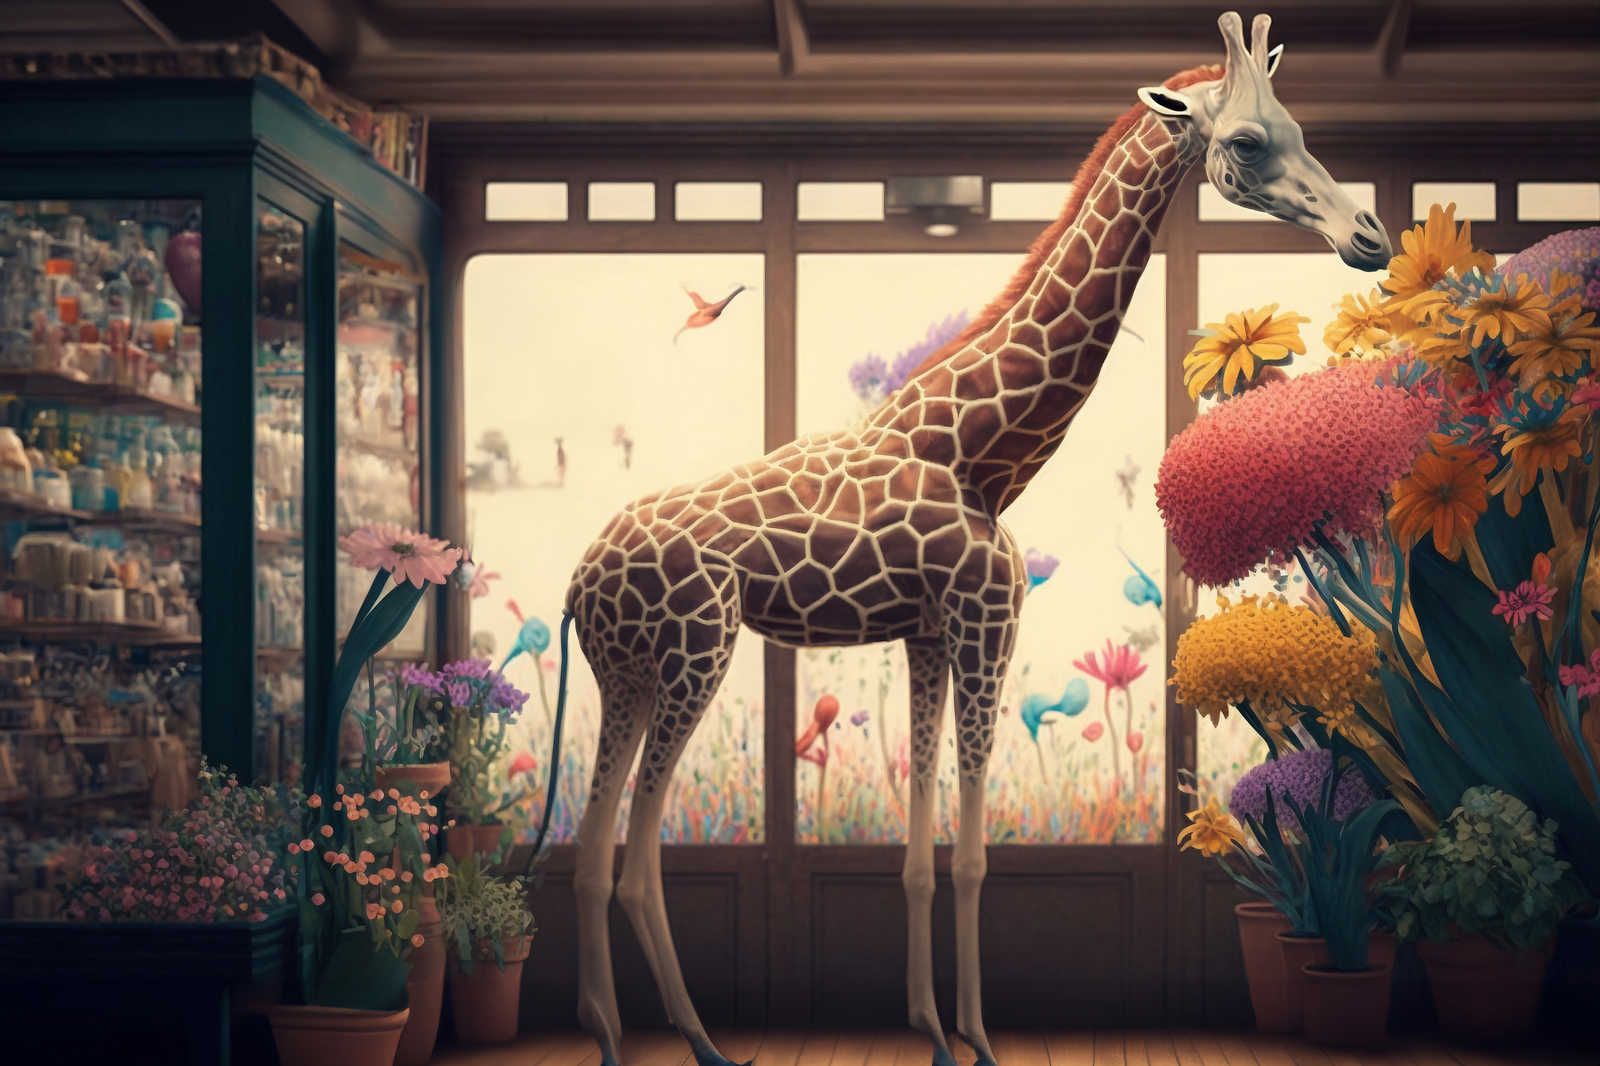             KI Canvas schilderij »bloem giraffe« - 90 cm x 60 cm
        